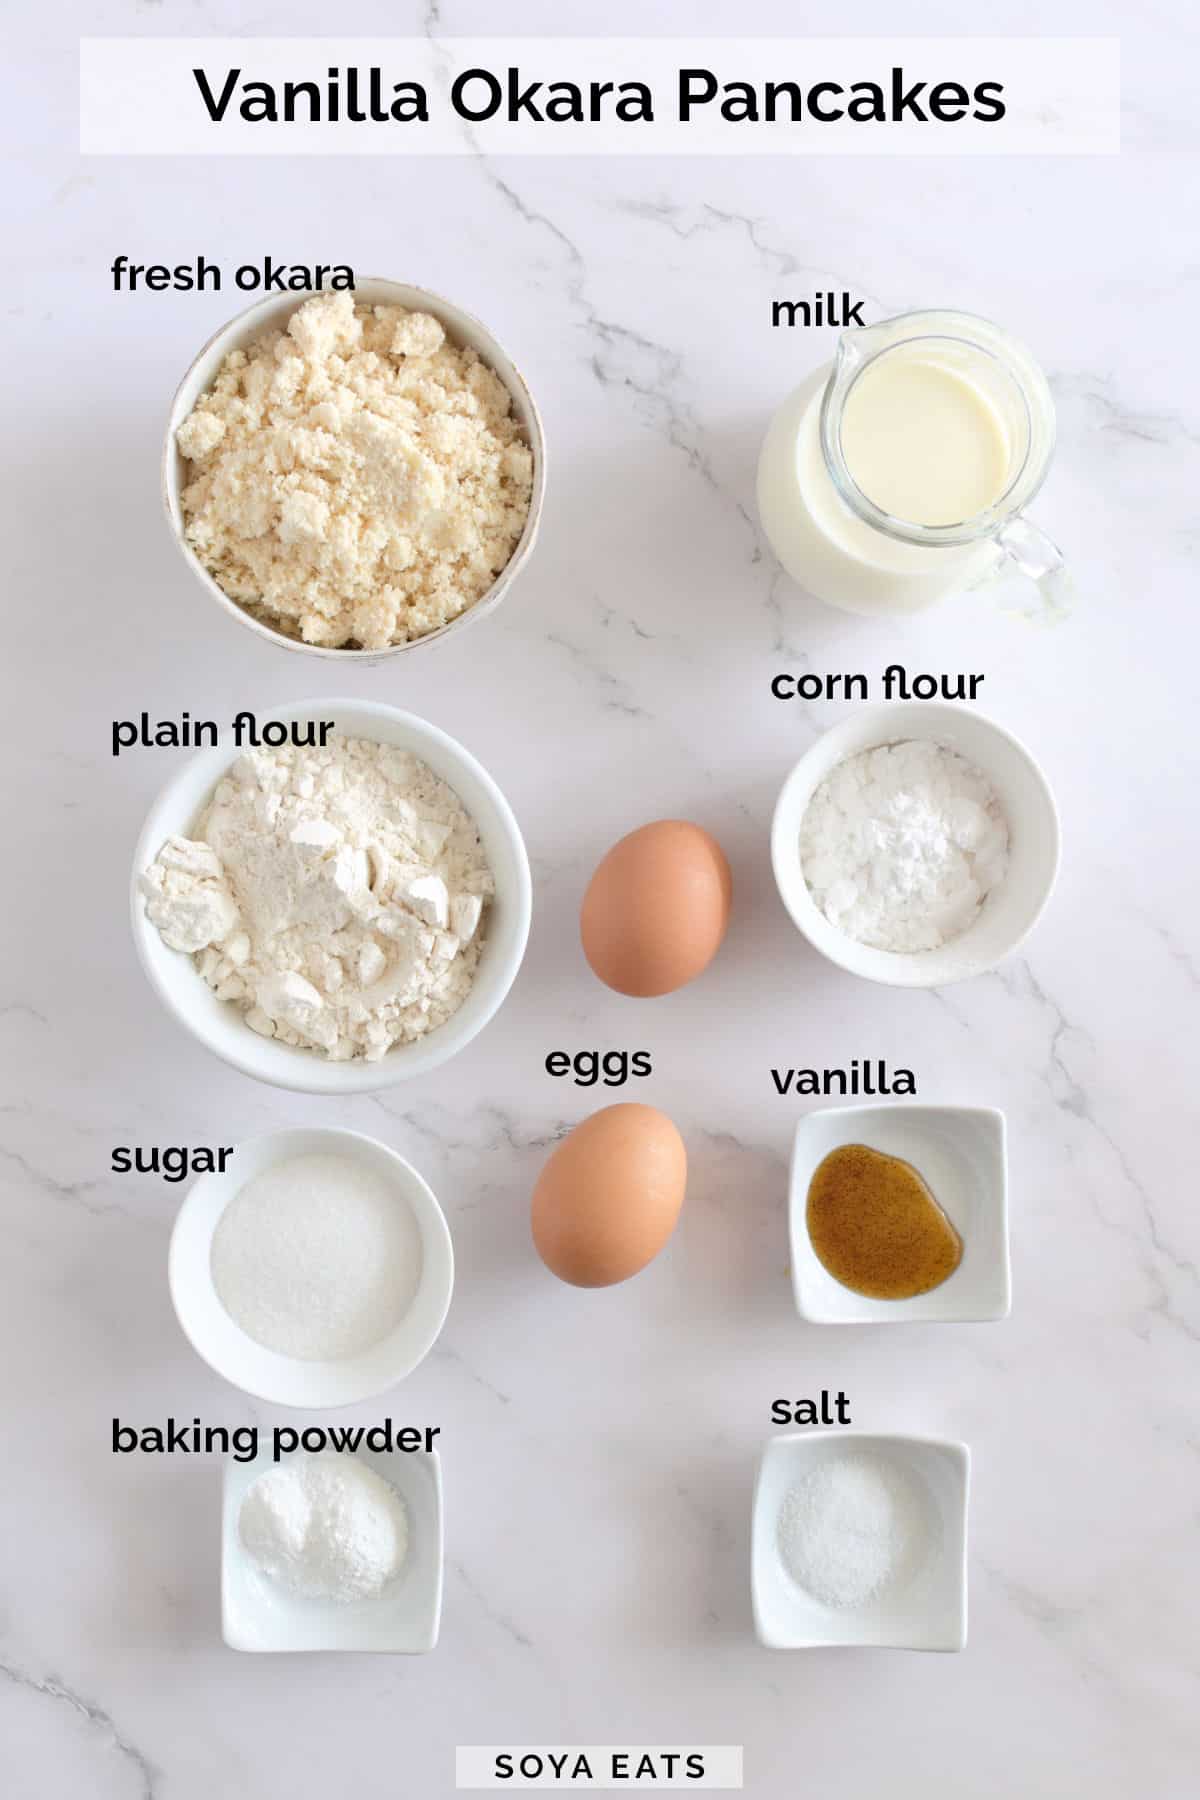 Image of ingredients for sweet okara pancakes.